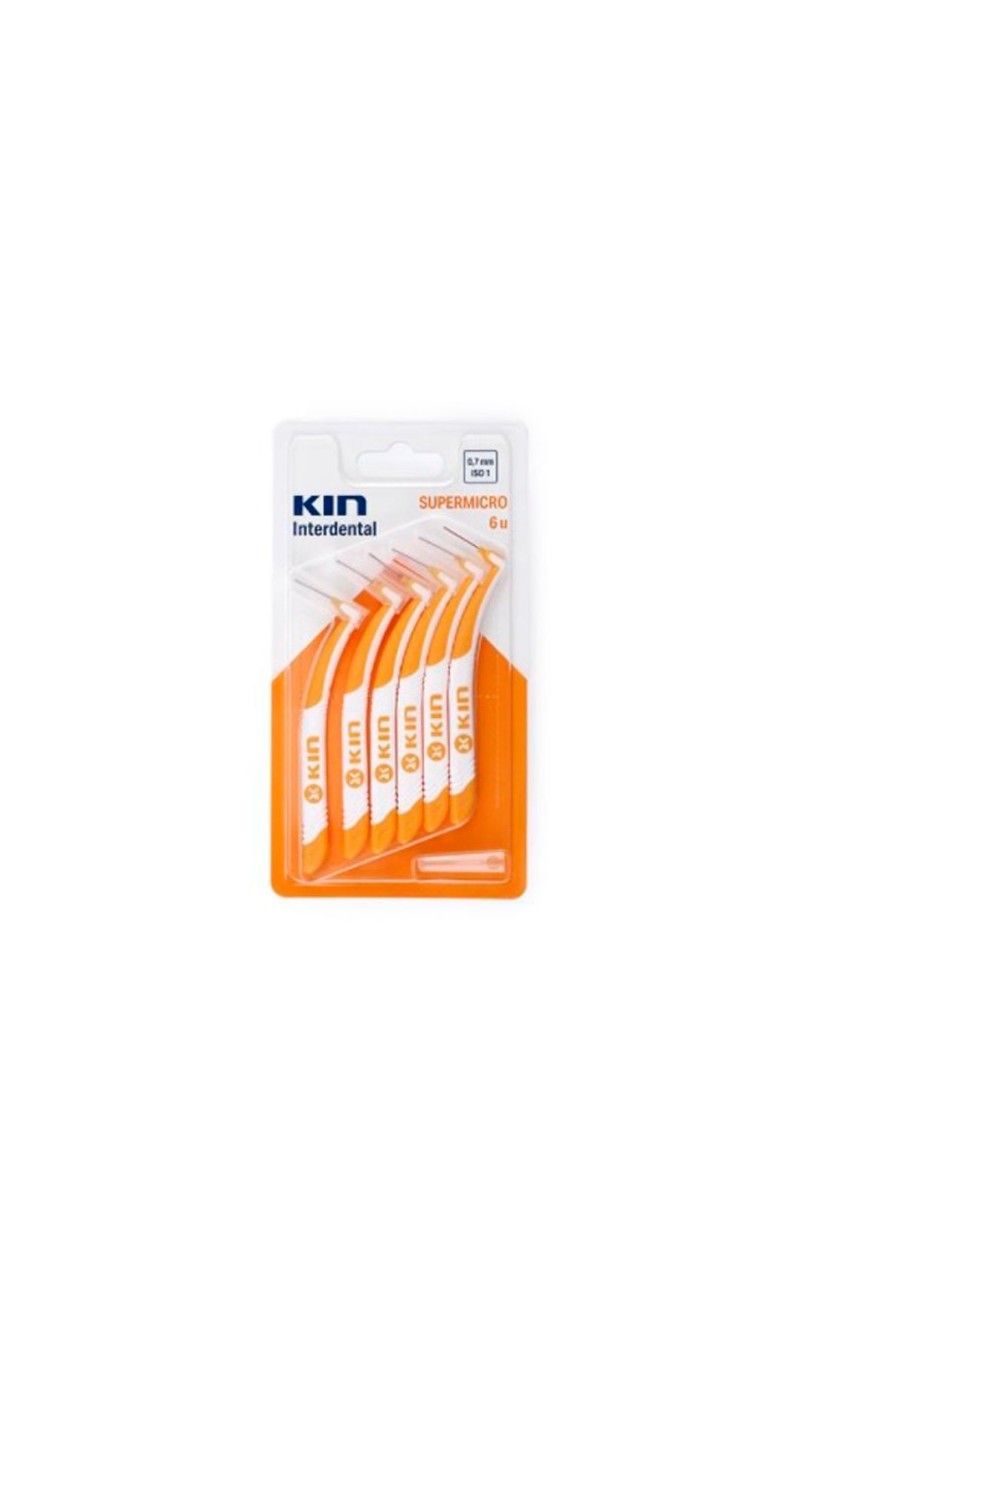 Kin Supermicro Interdental Brush 6 Uts